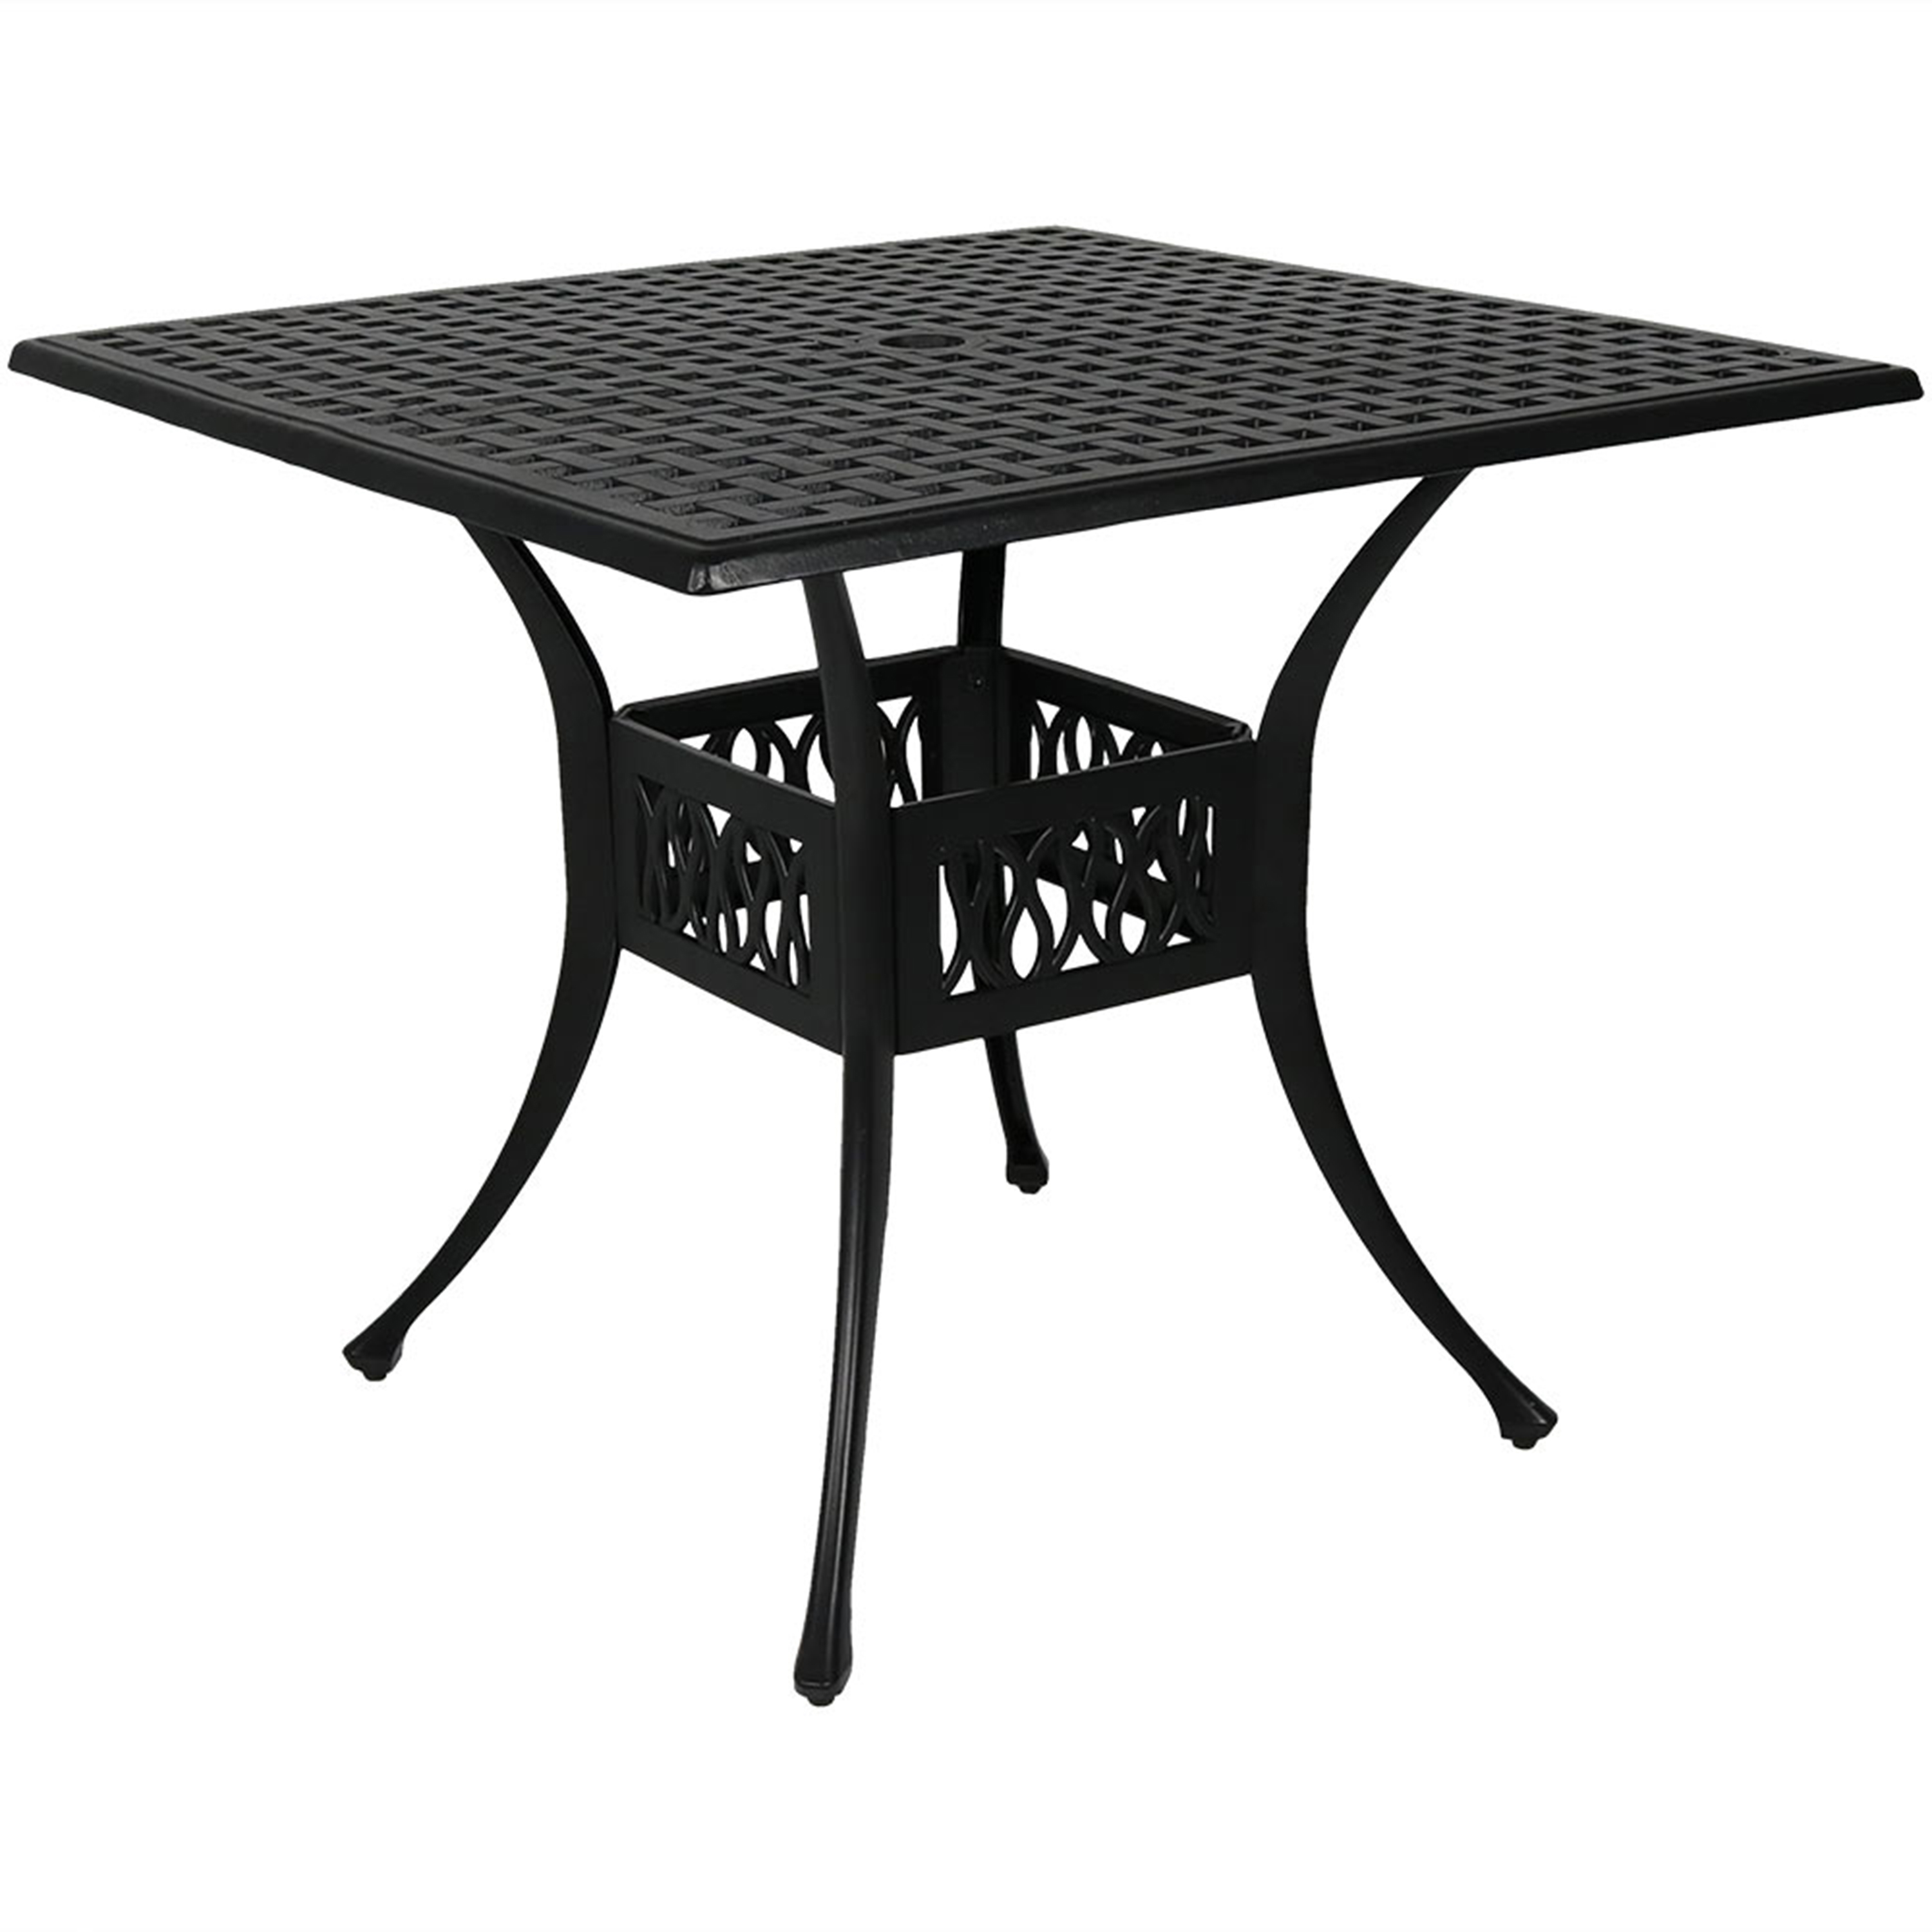 Sunnydaze Black Cast Aluminum Square Dining Table - 35 Inch